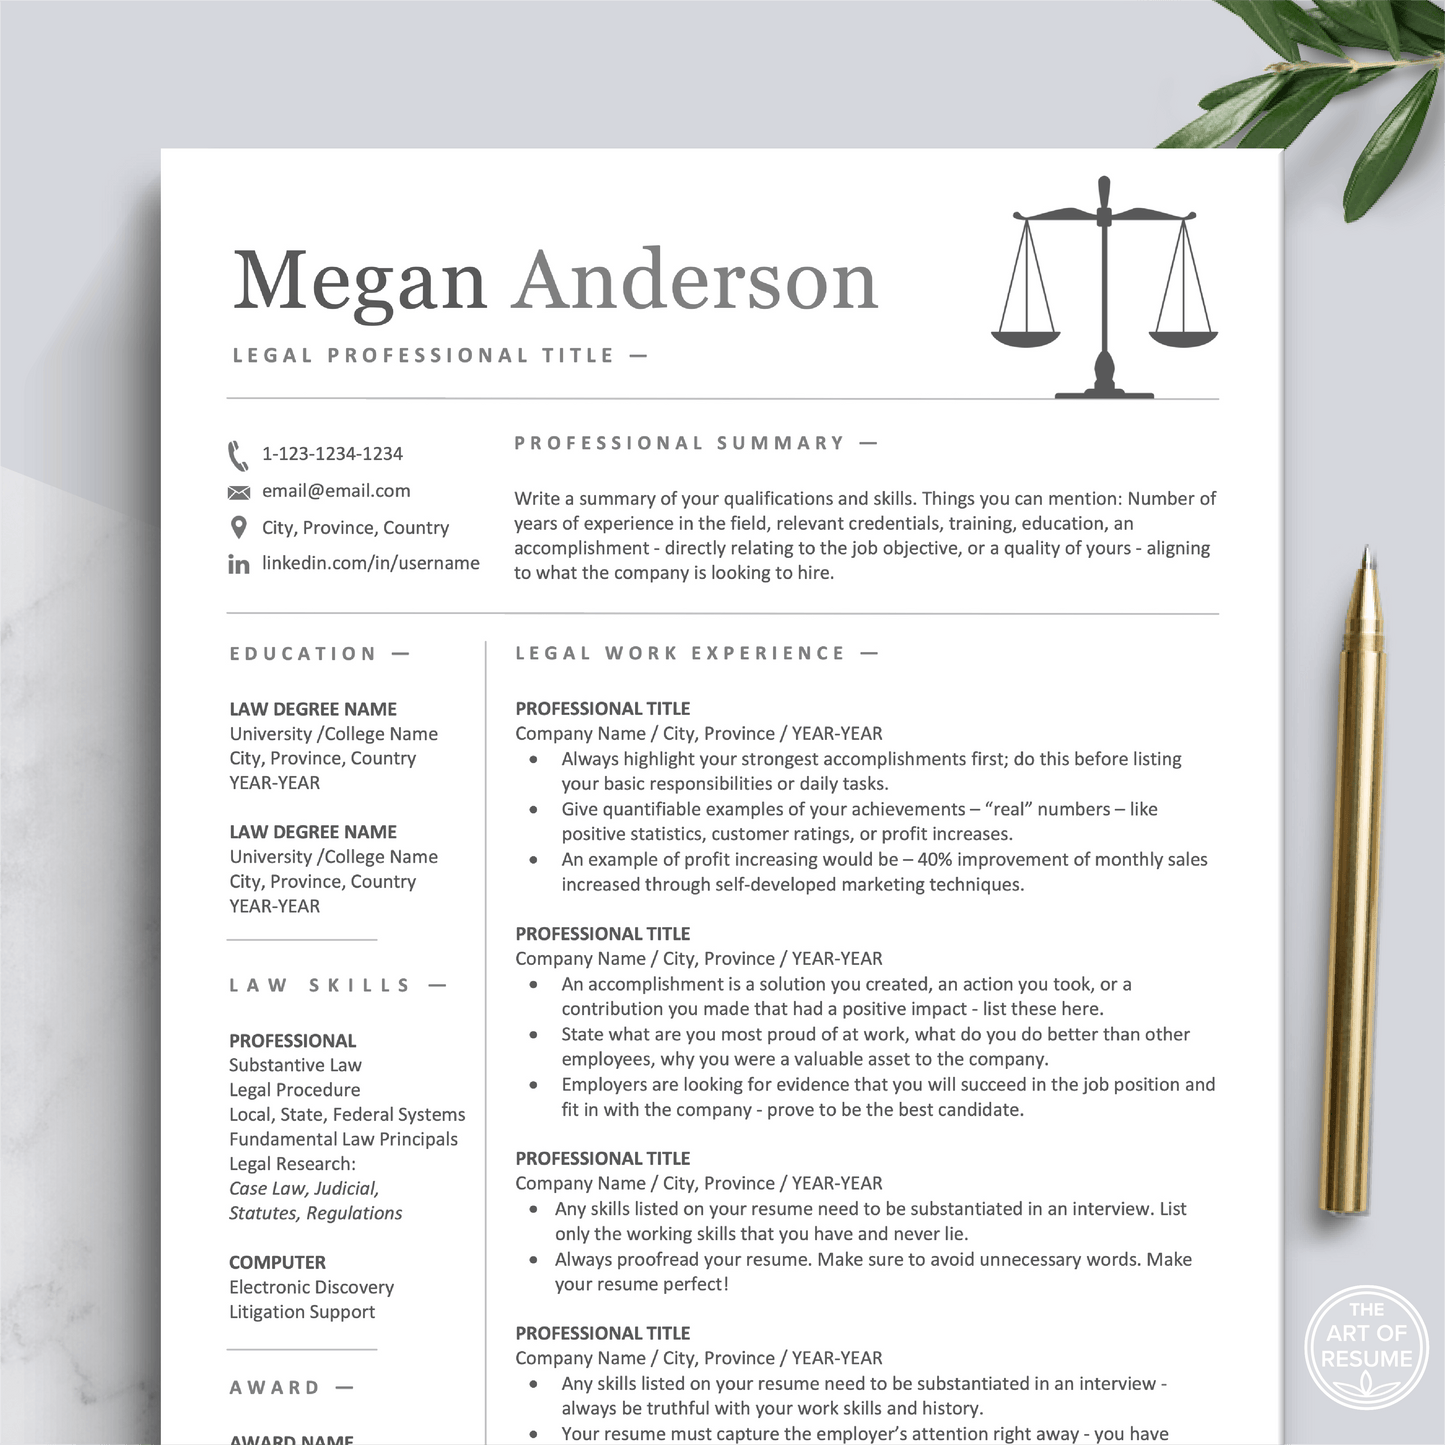 Lawyer Resume Design | Attorney CV | Legal Resume - The Art of Resume